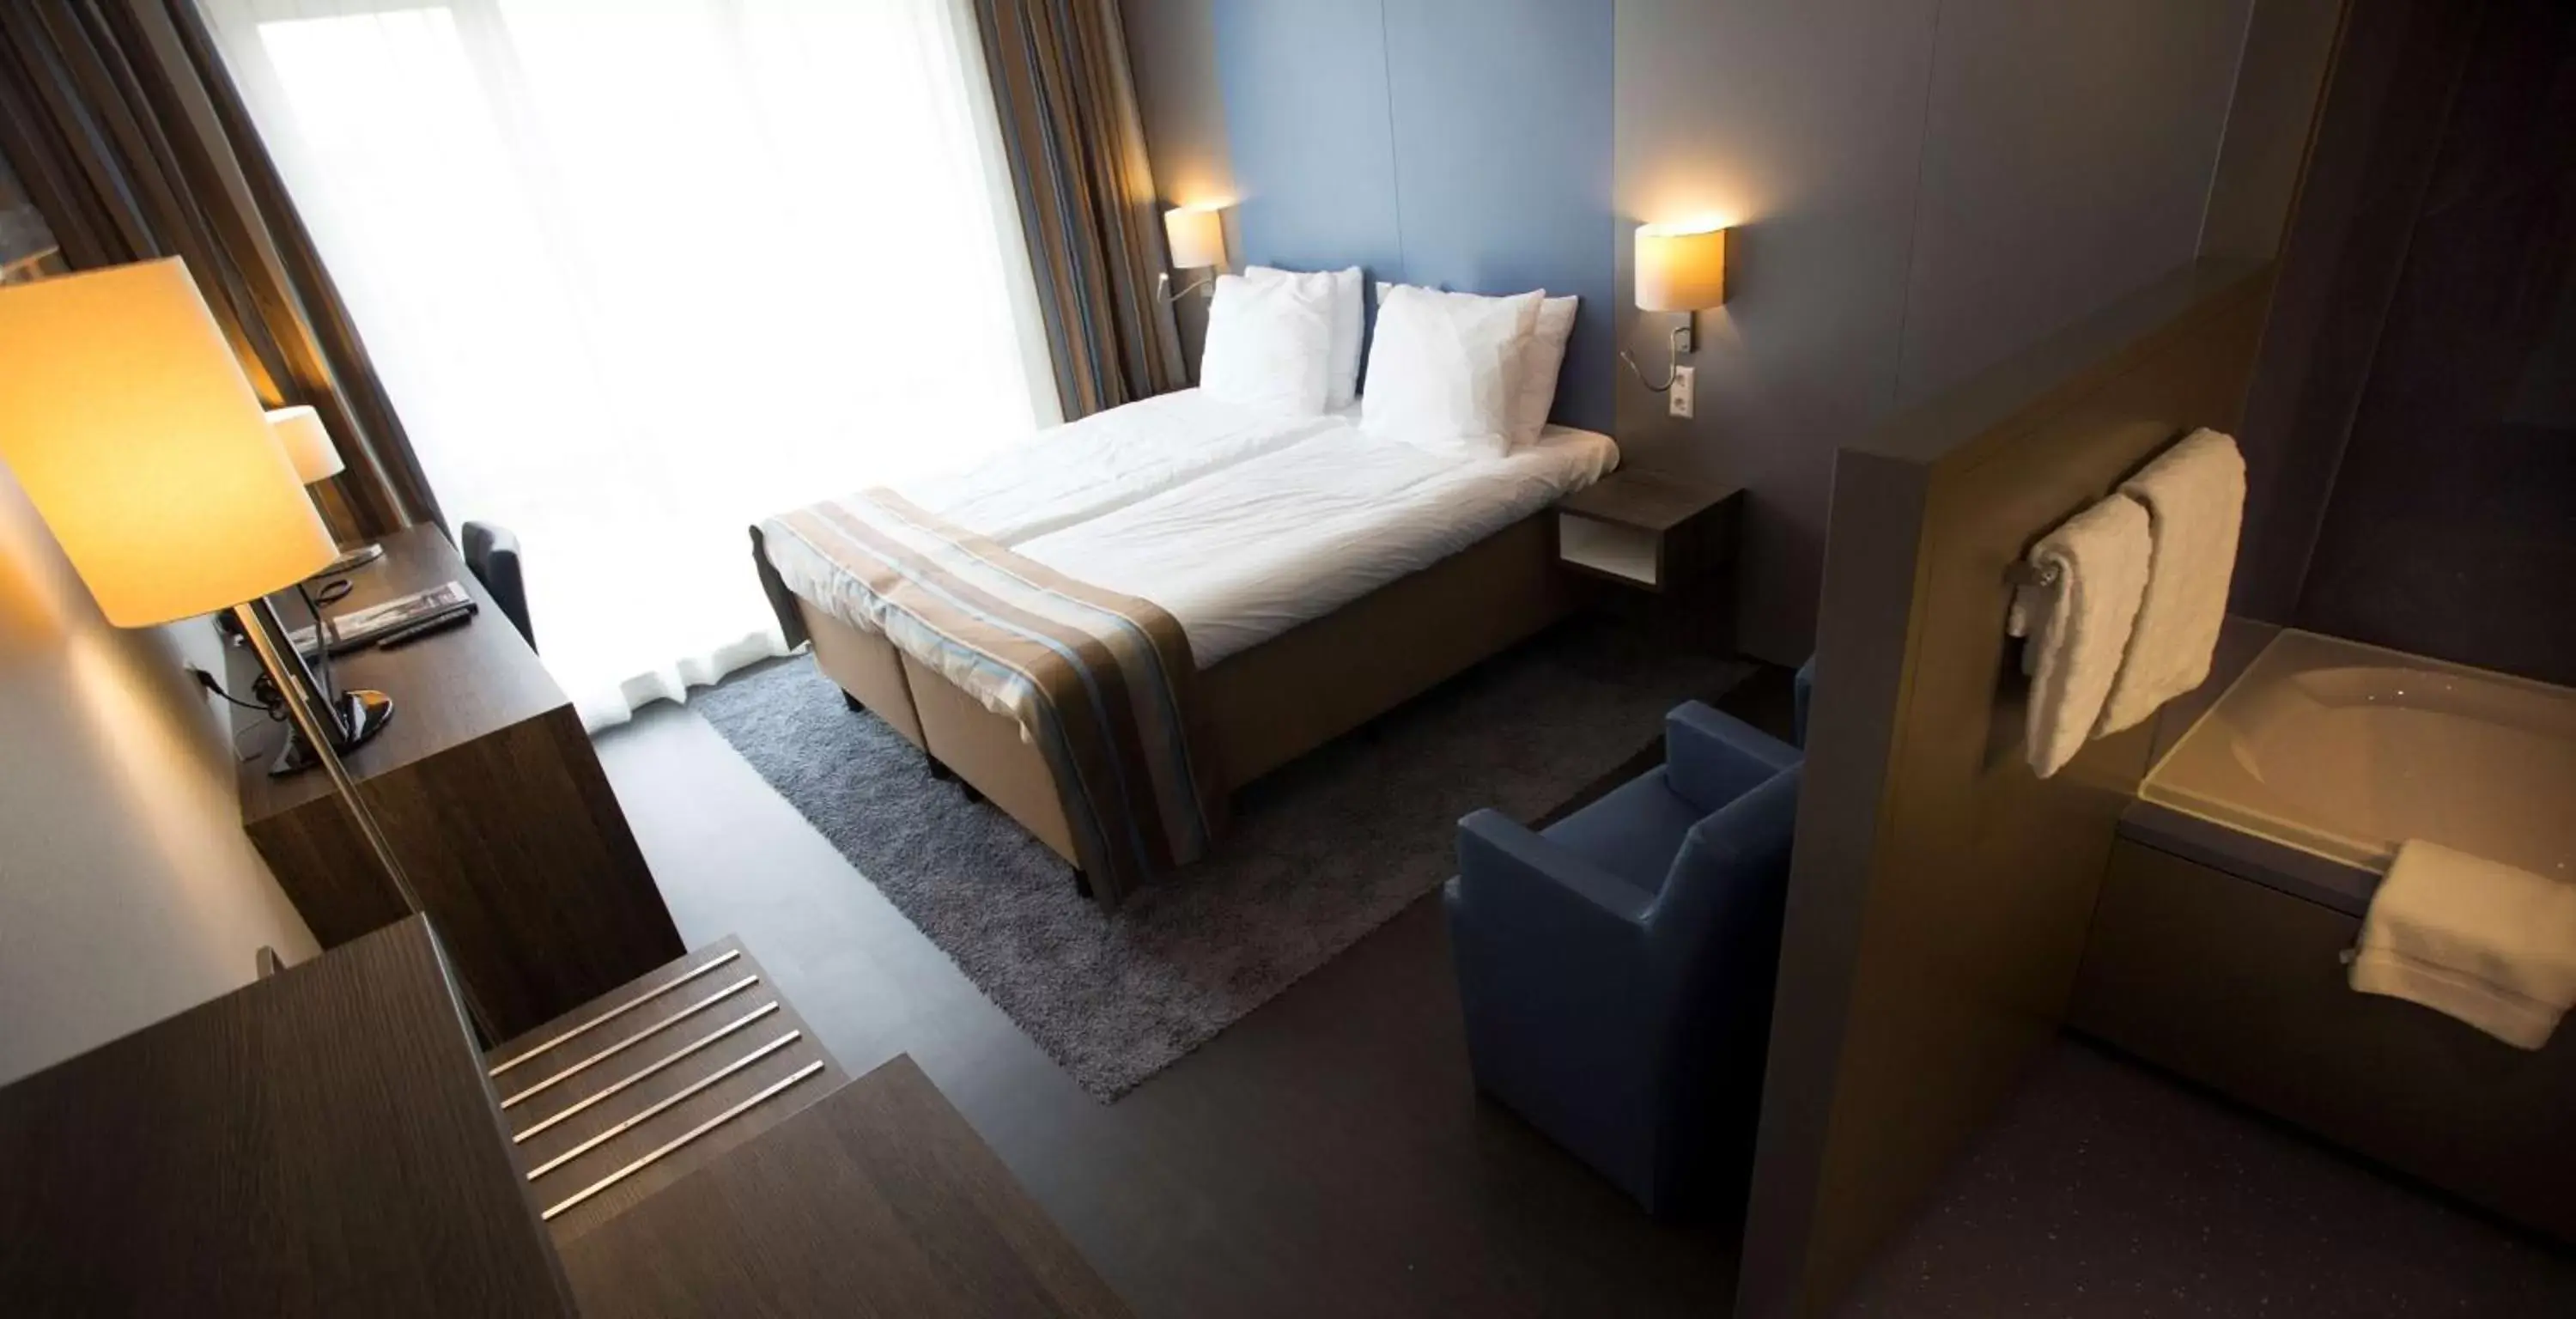 Shower, Bed in Best Western Plus City Hotel Gouda